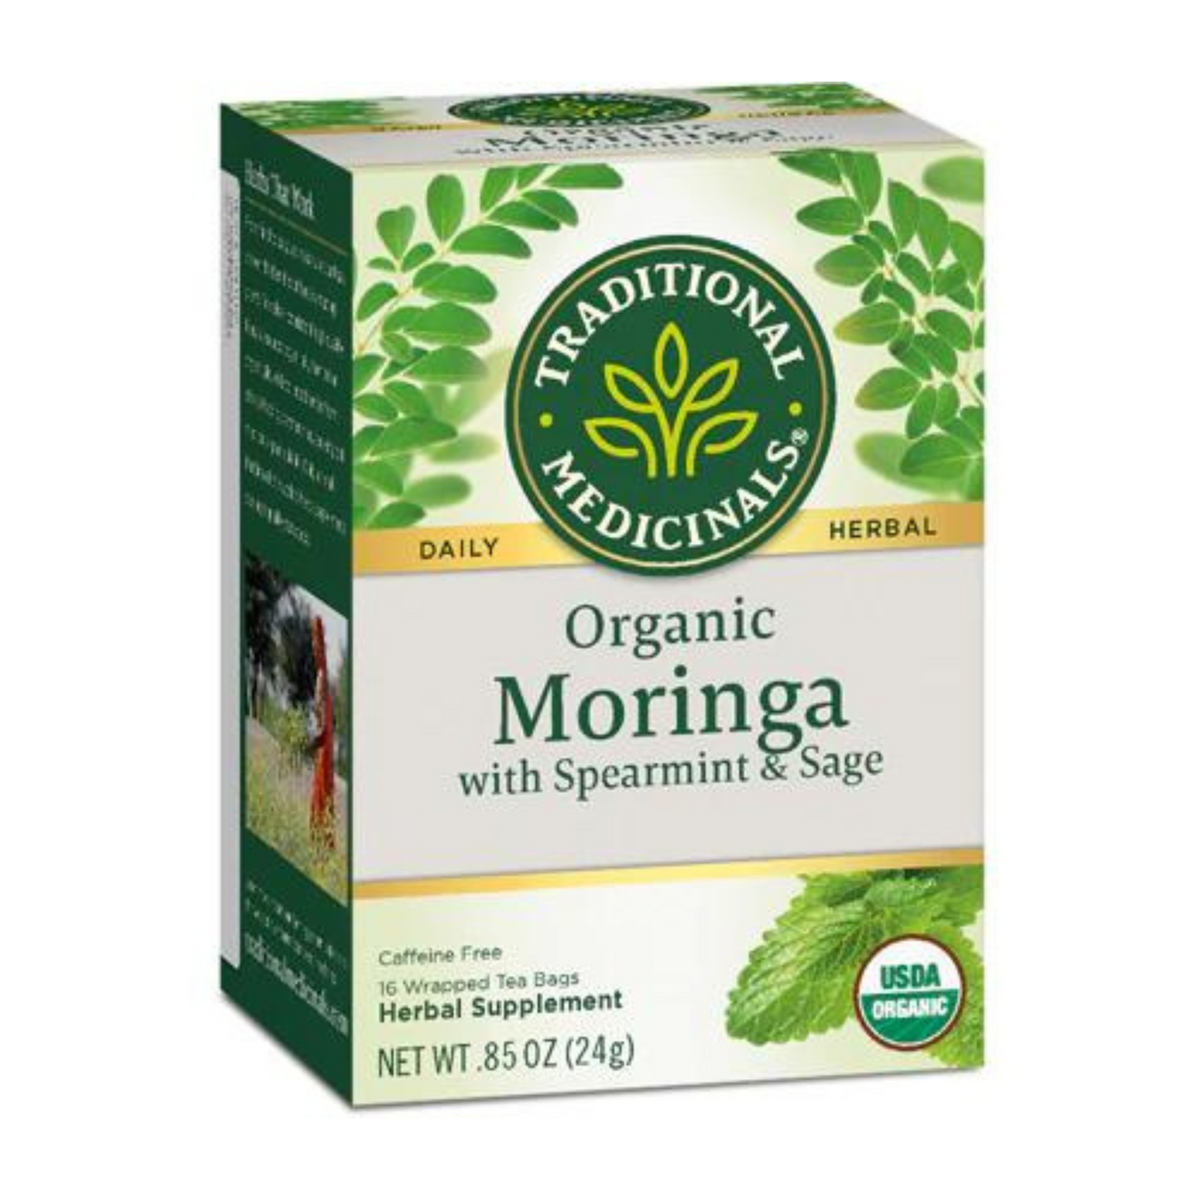 Primary Image of Moringa Tea